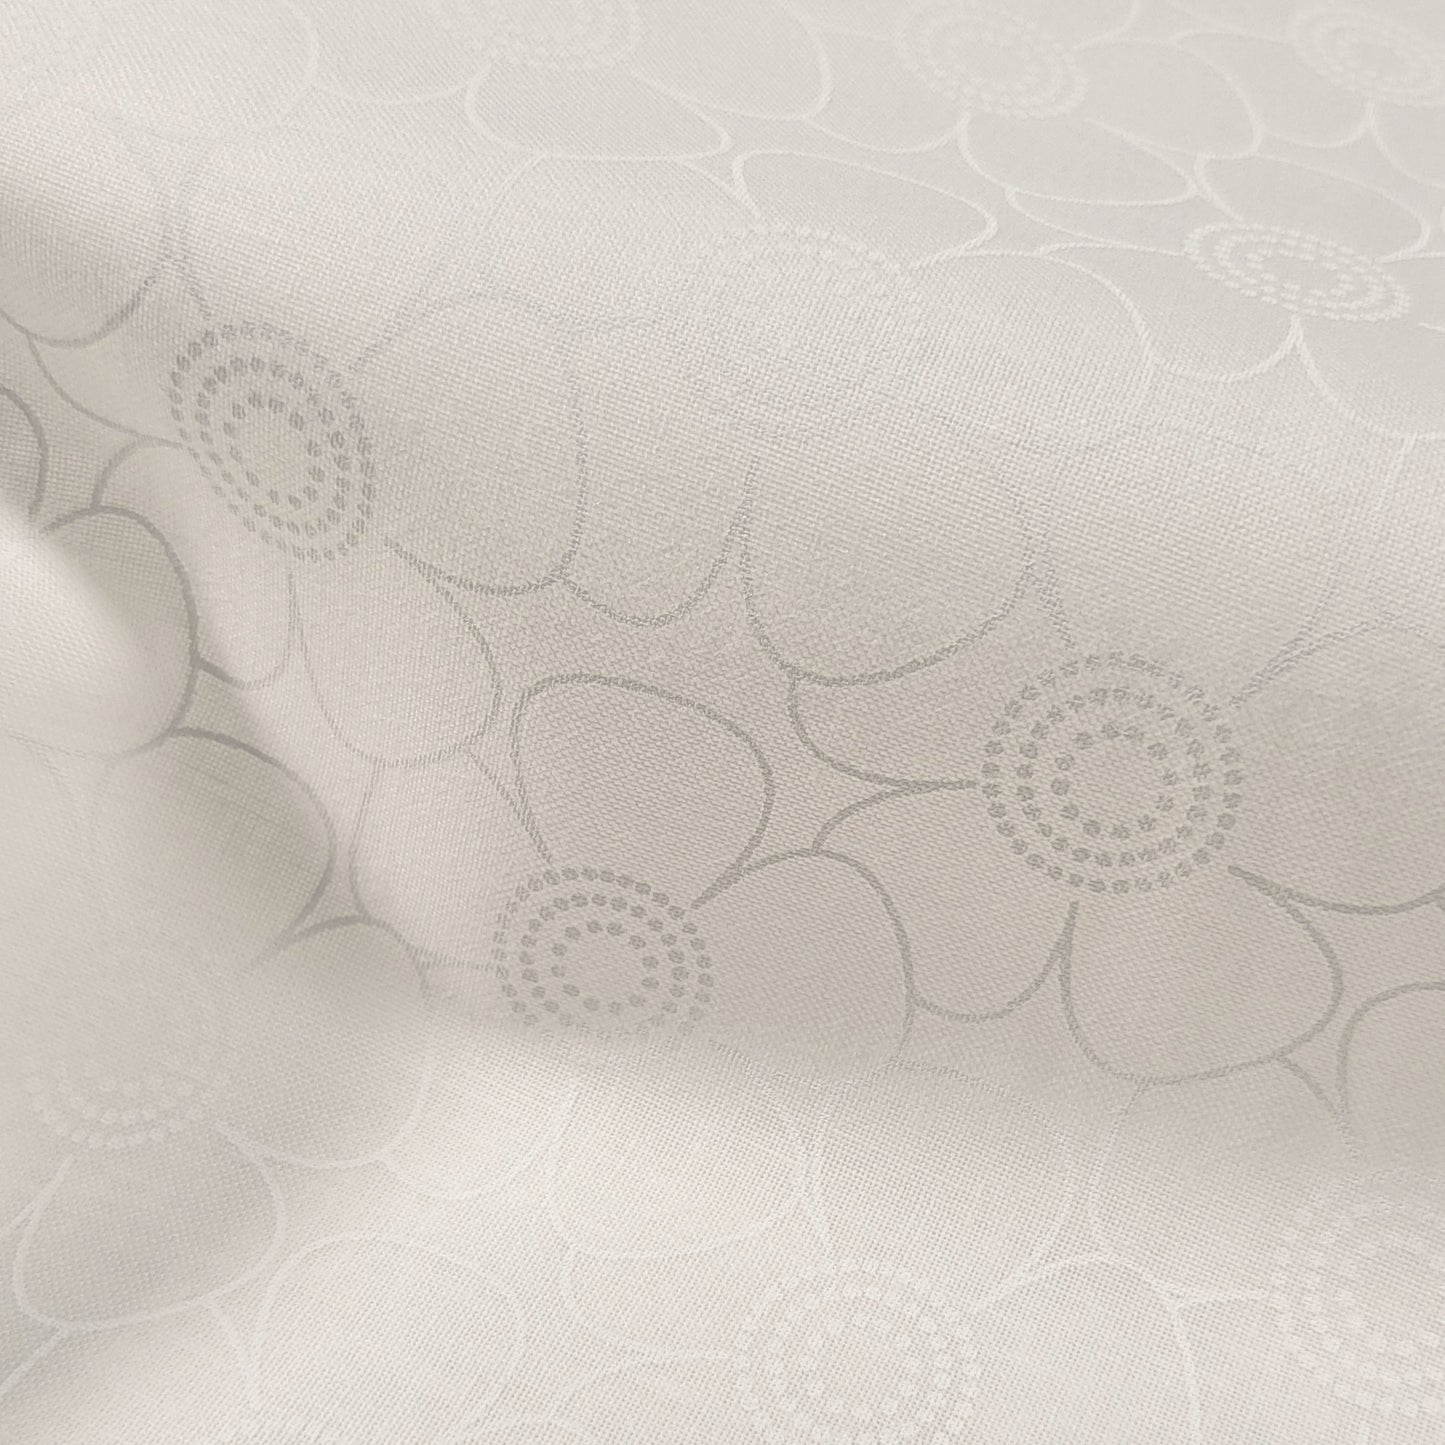 Harmony Prints - White on White - 1250-141 in Floral - Full Bolt (15m)